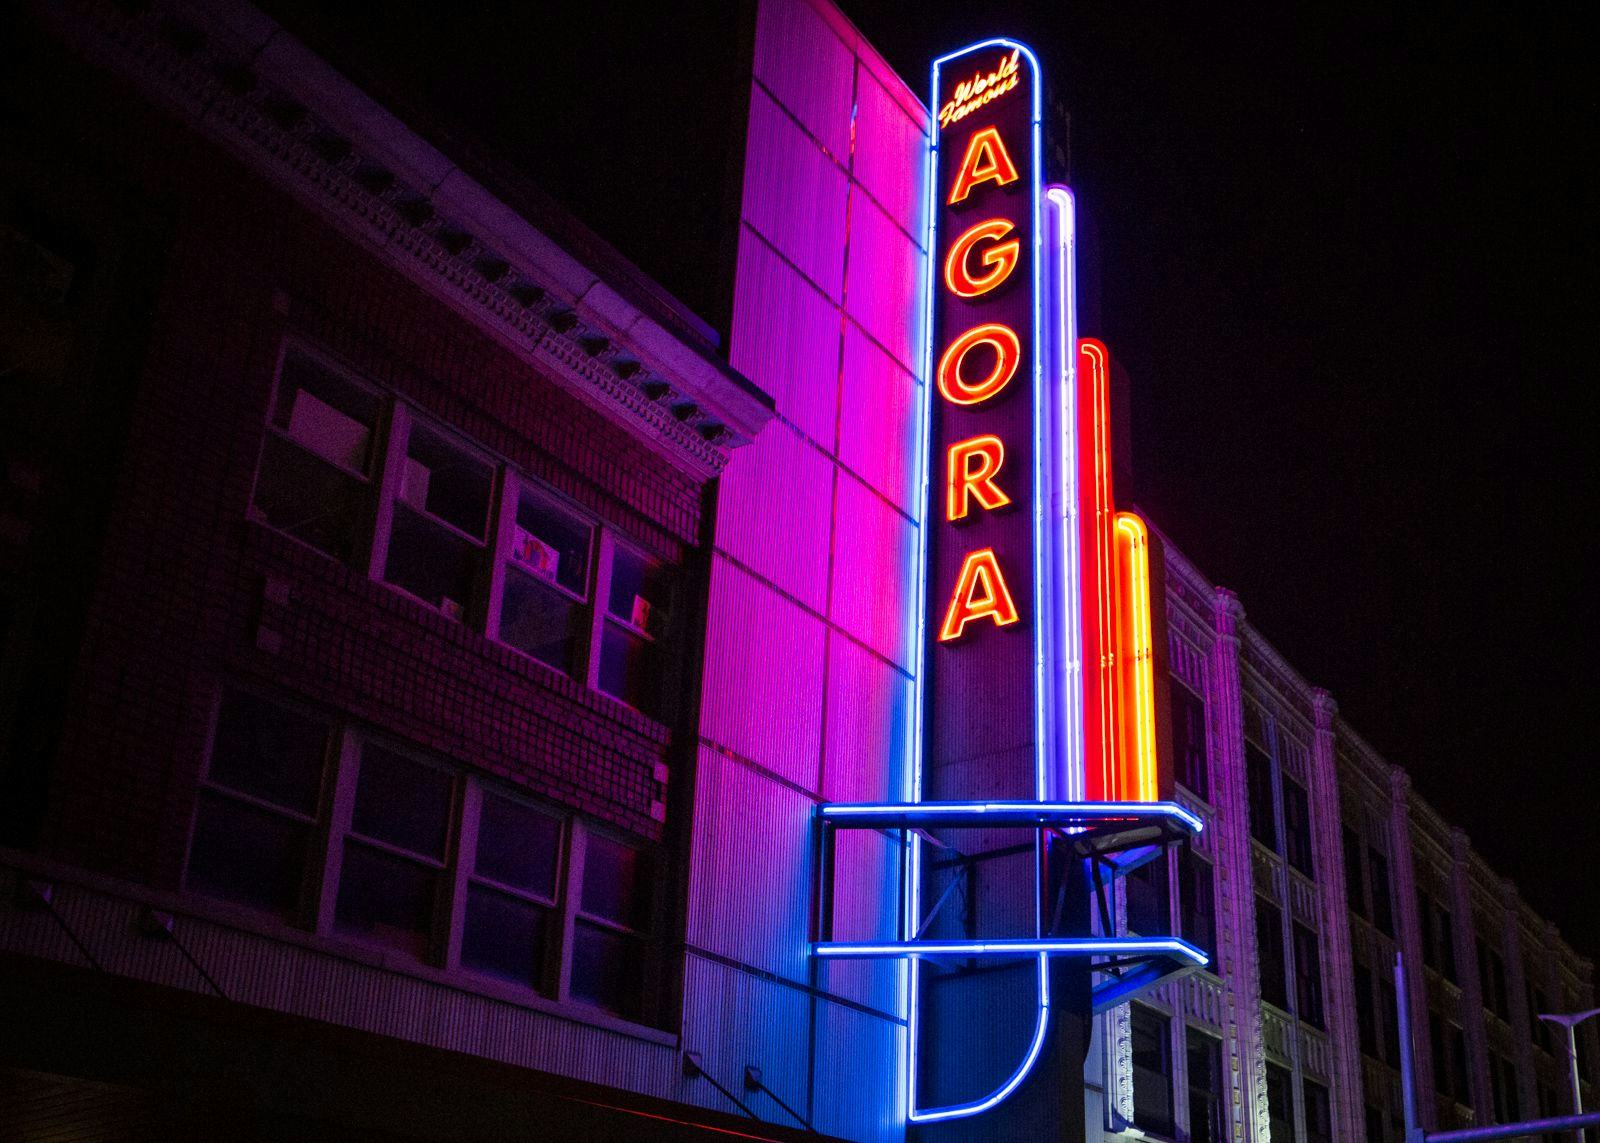 The Agora Theater and Ballroom